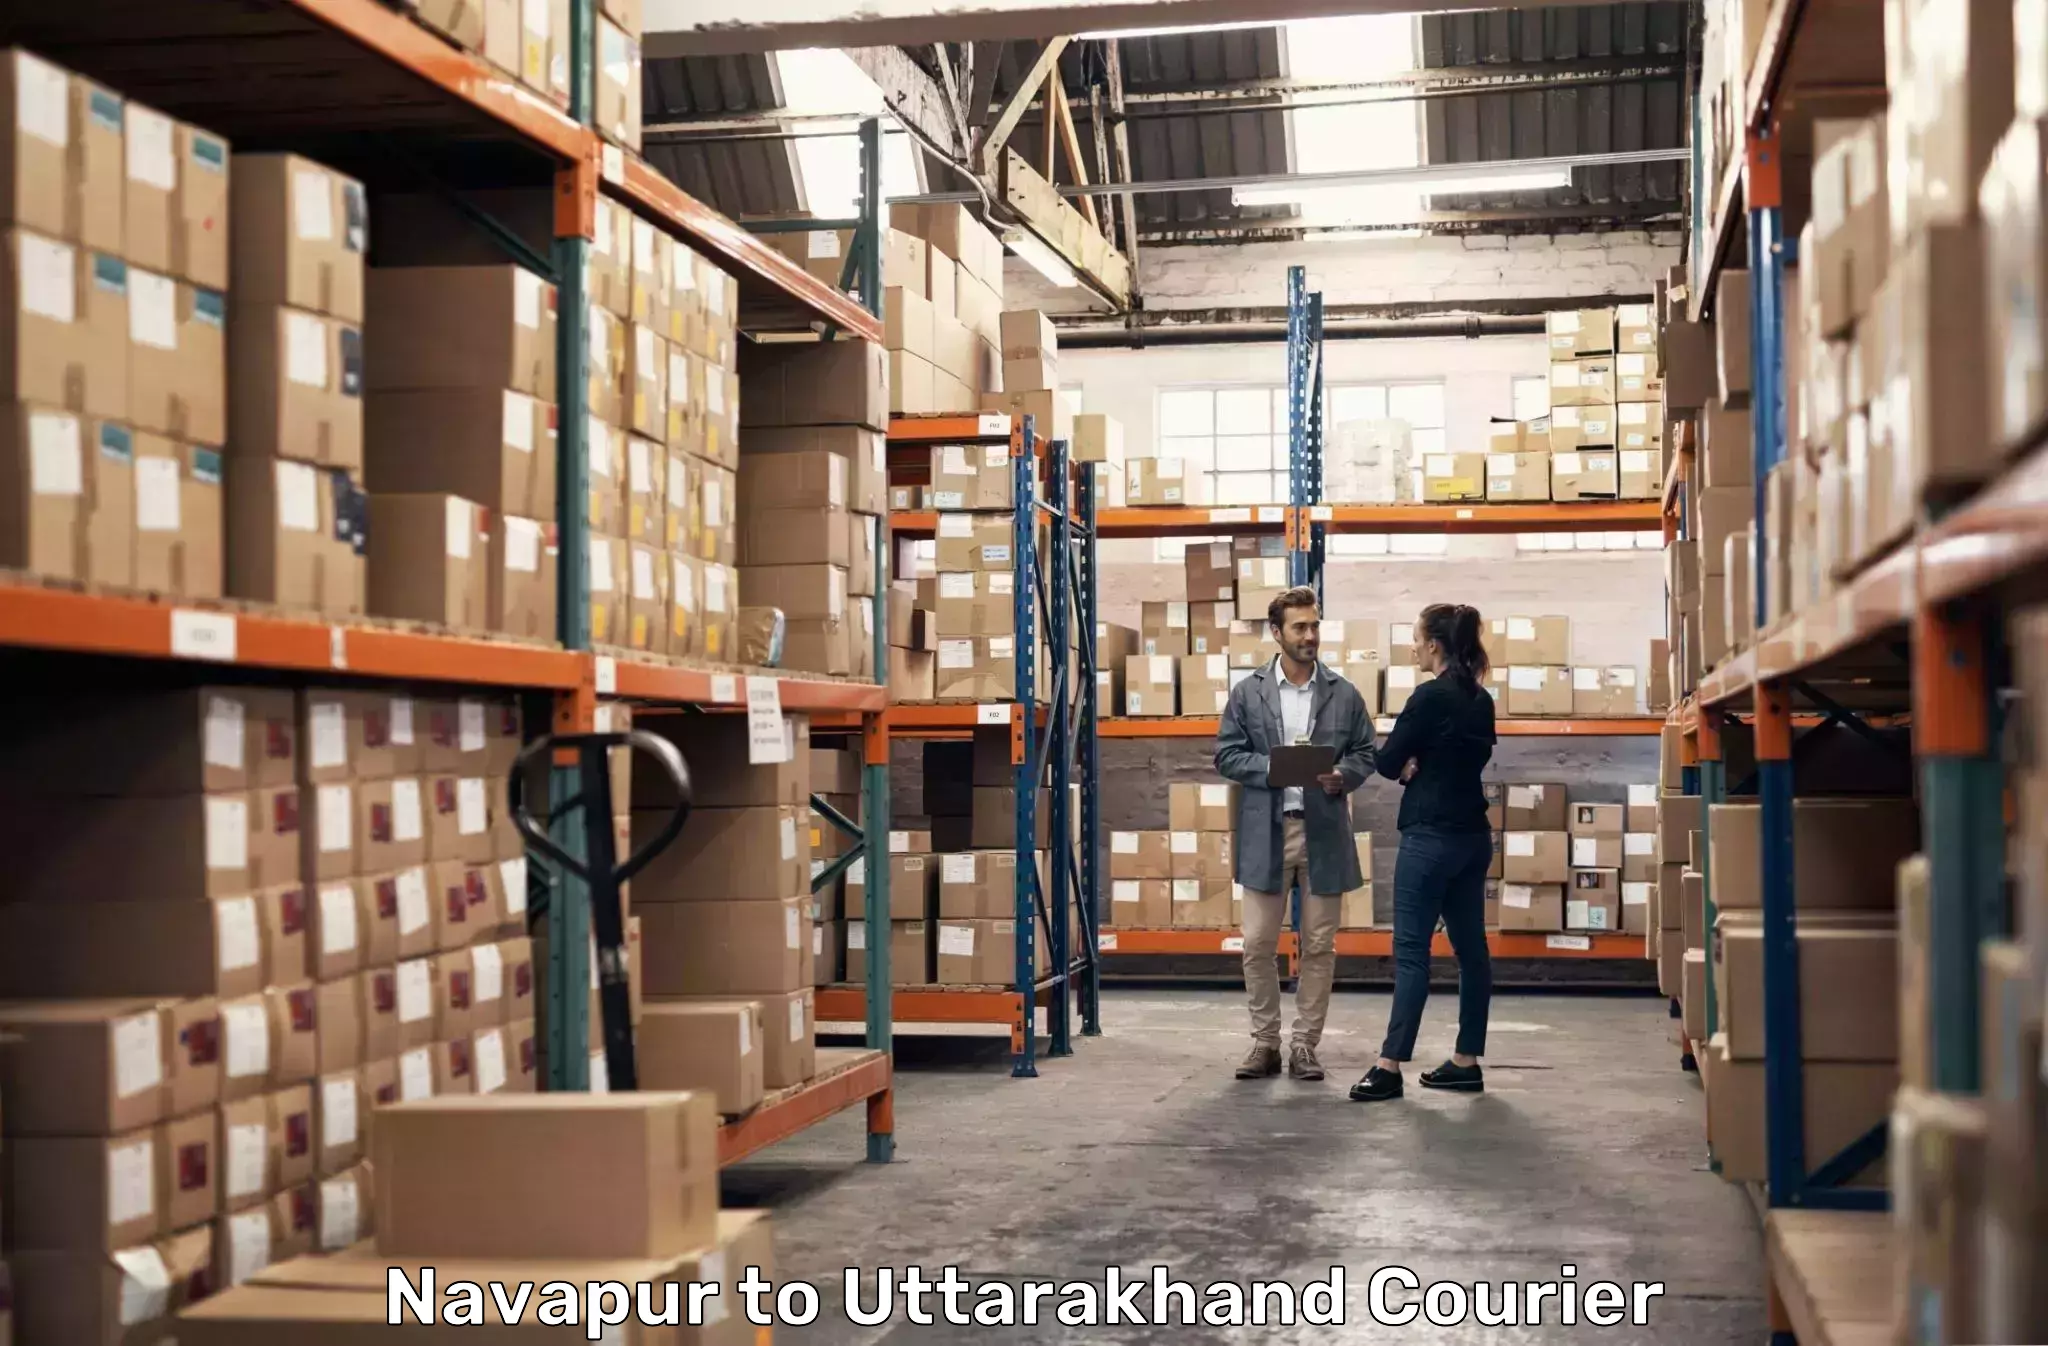 Courier service comparison in Navapur to Pauri Garhwal